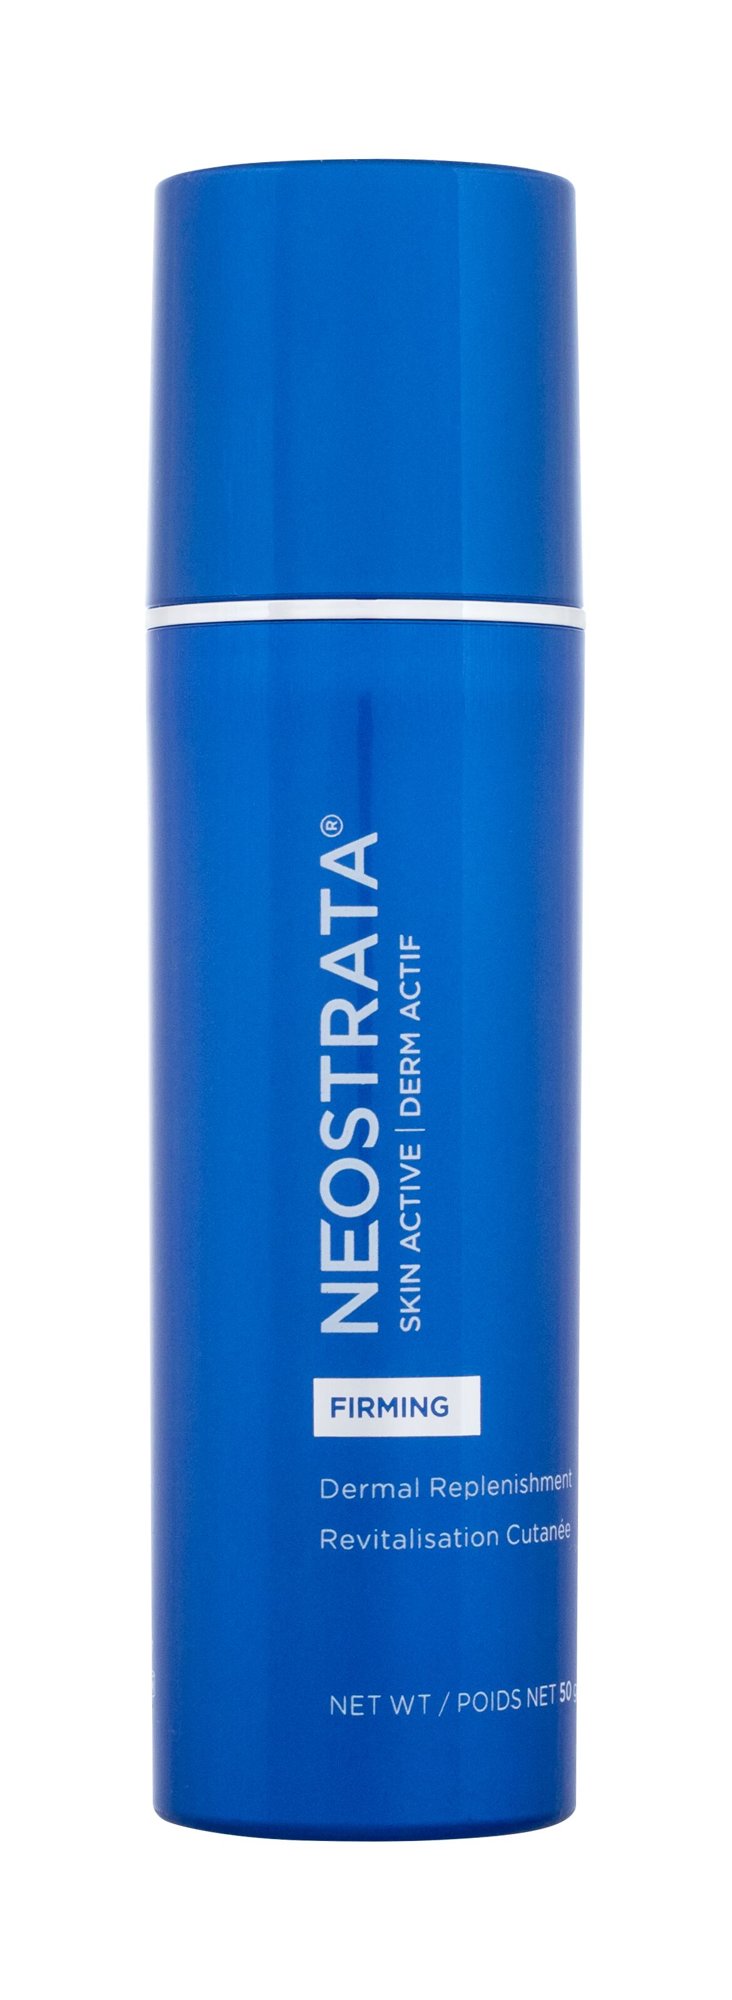 NeoStrata Firming Dermal Replenishment 50g naktinis kremas